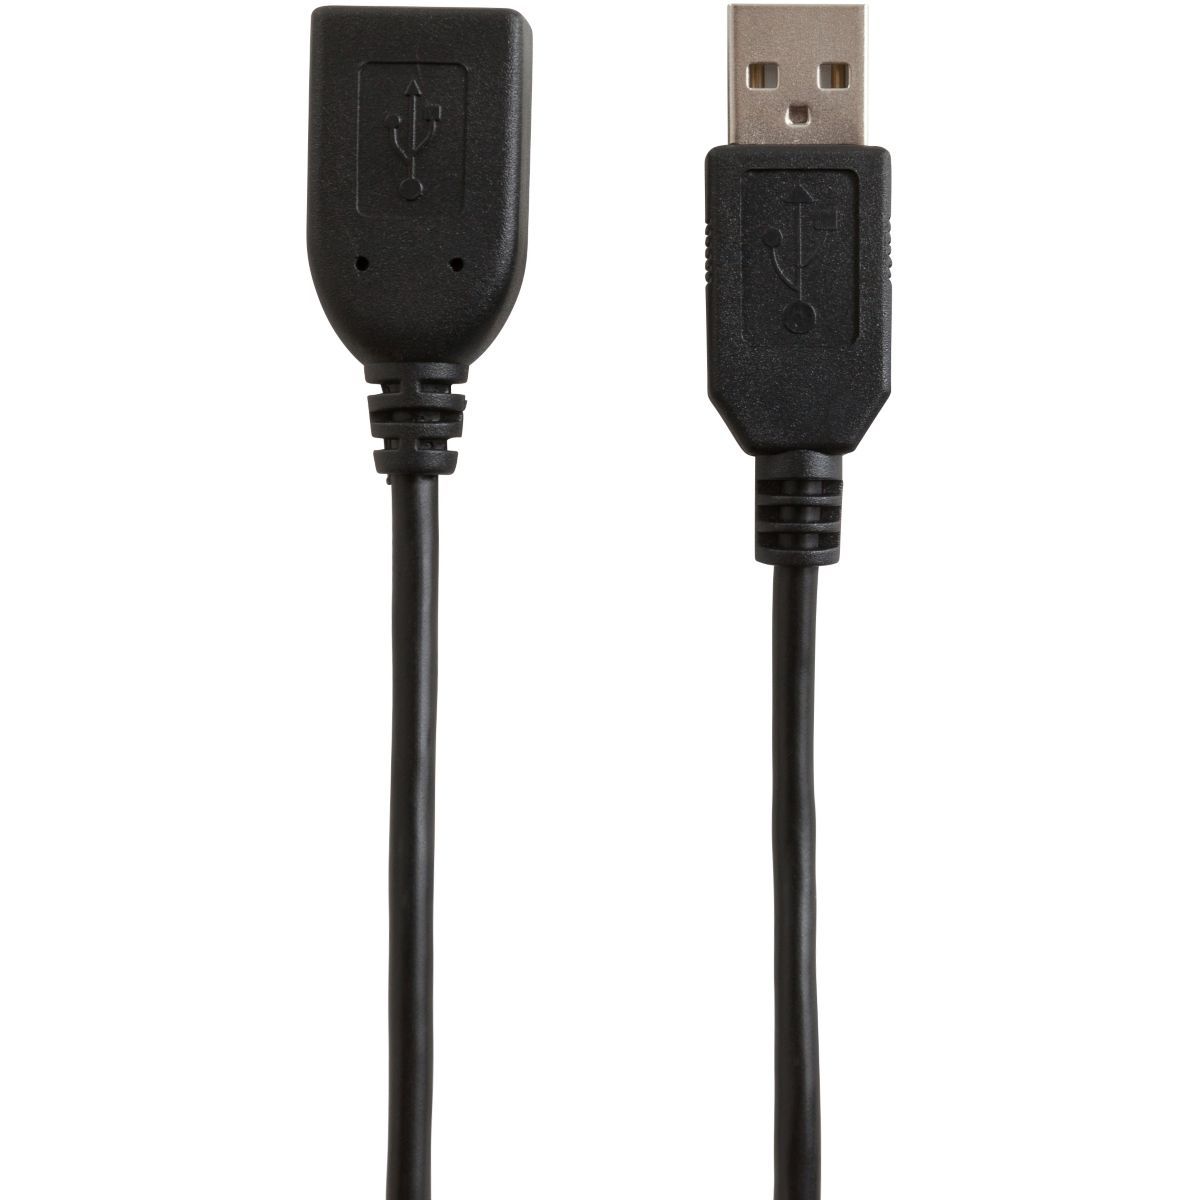 ESSENTIEL B Câble USB USB 1M80 Rallonge 2.0AA pas cher 